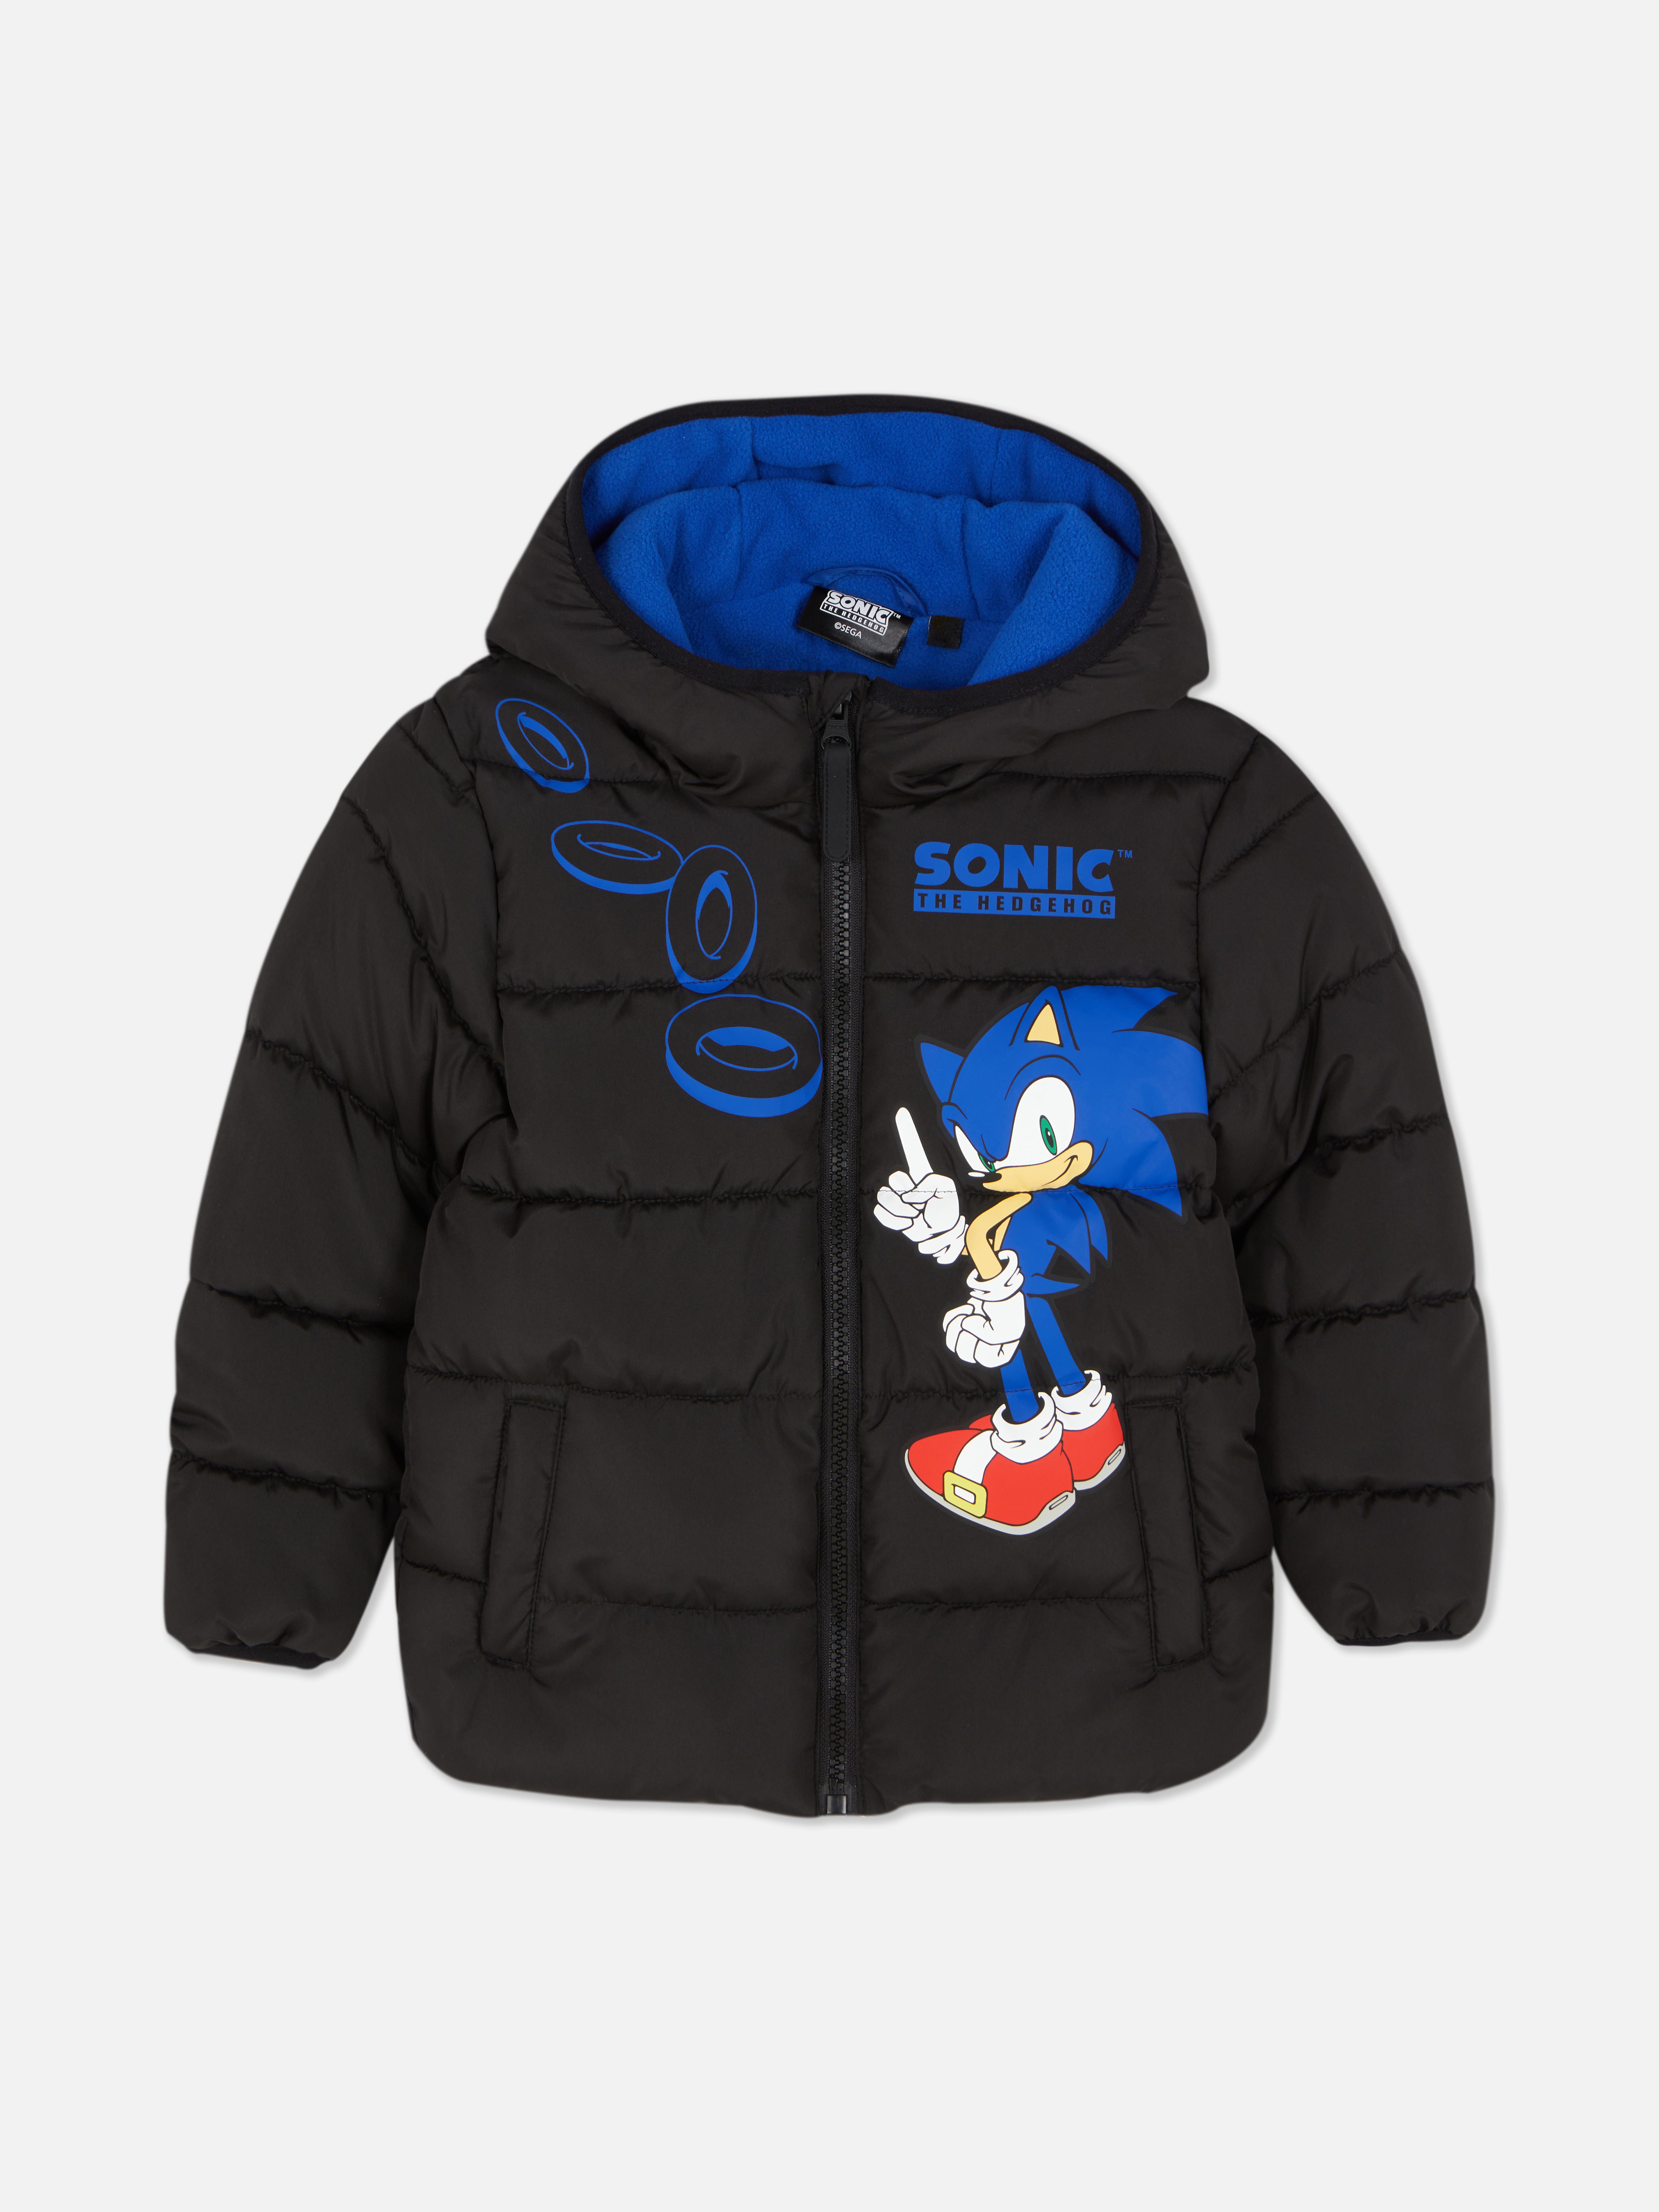 Sonic The Hedgehog Puffer Jacket